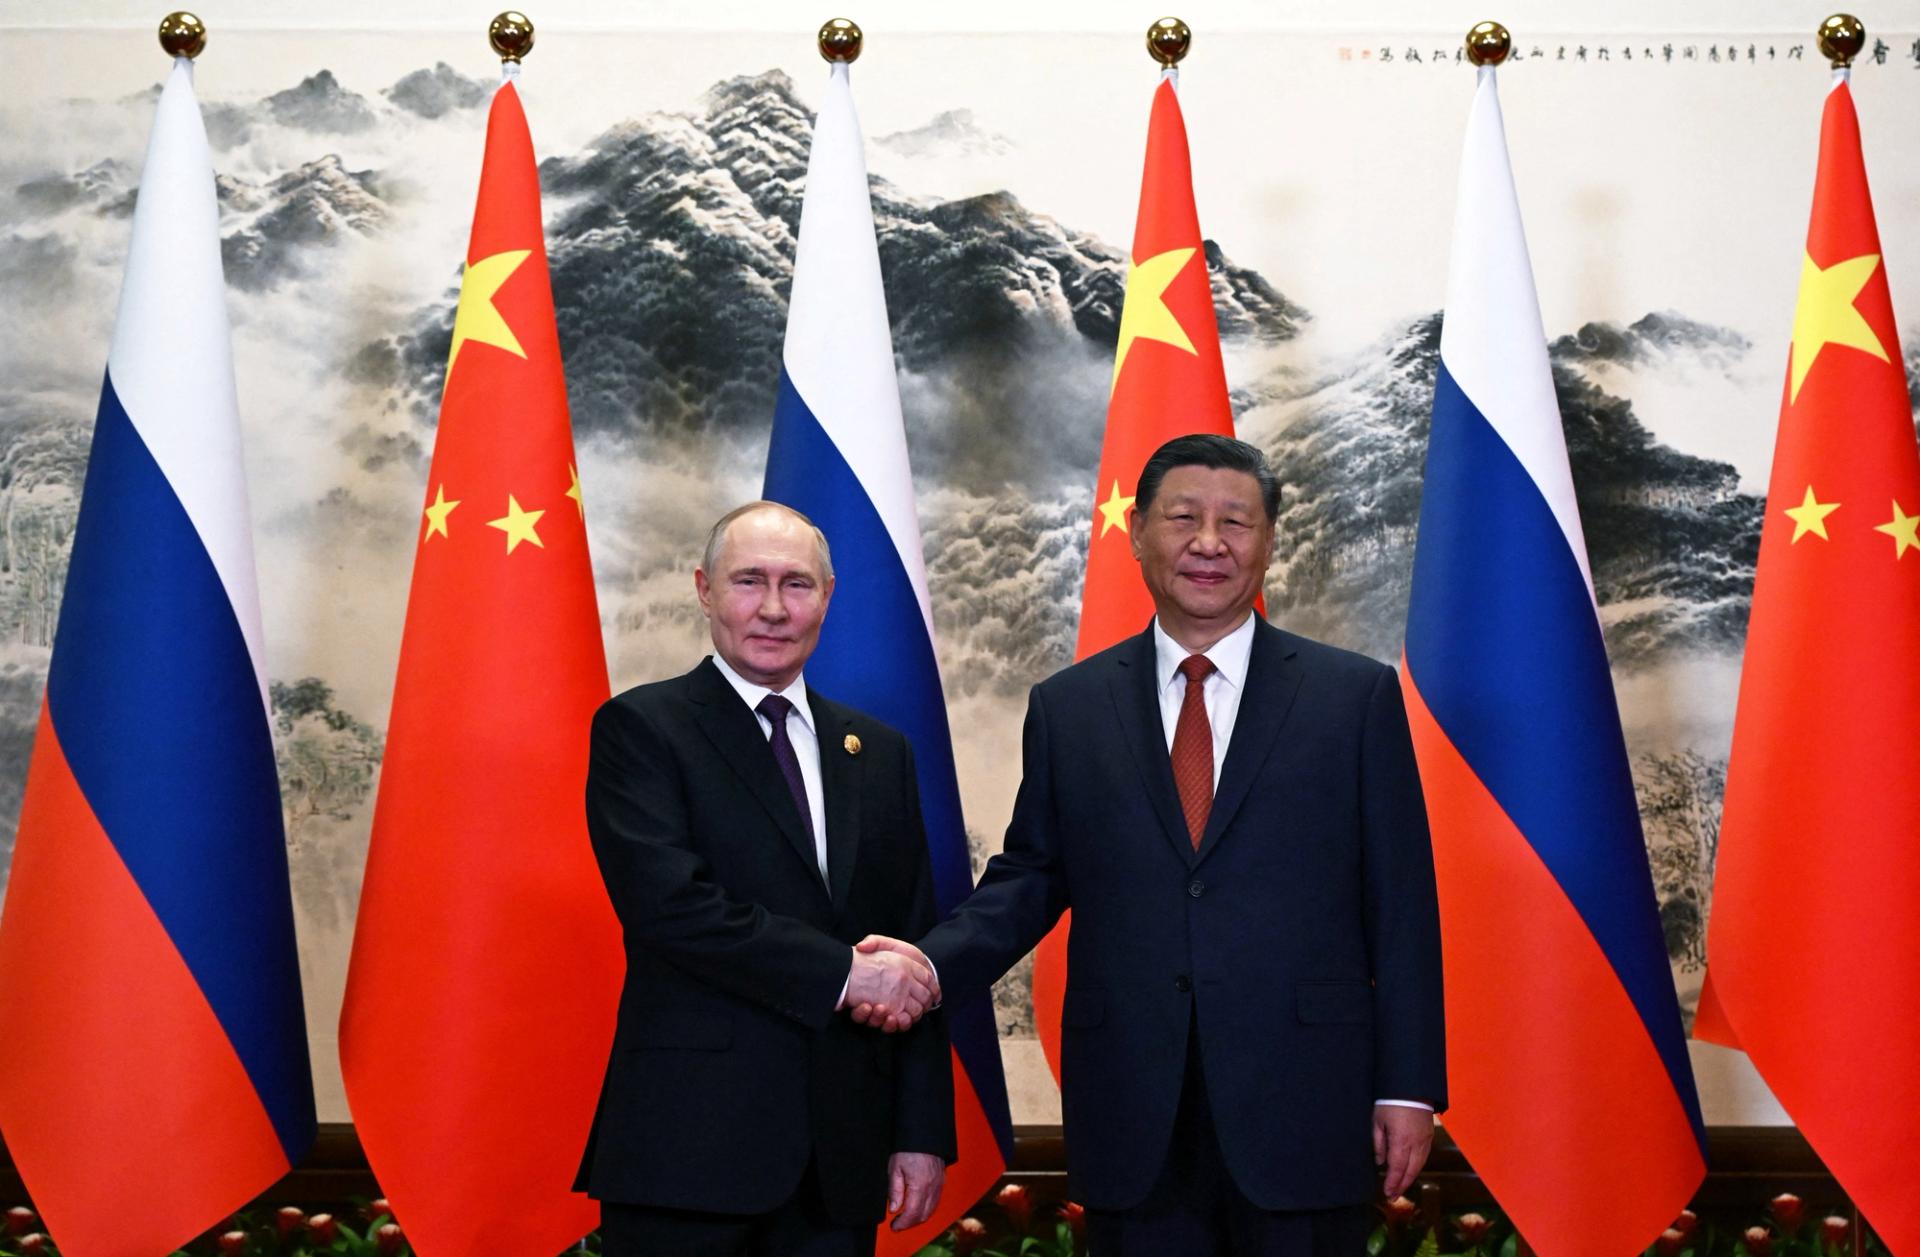 Vladimir Putin and Xi Jinping during a recent meeting in Beijing